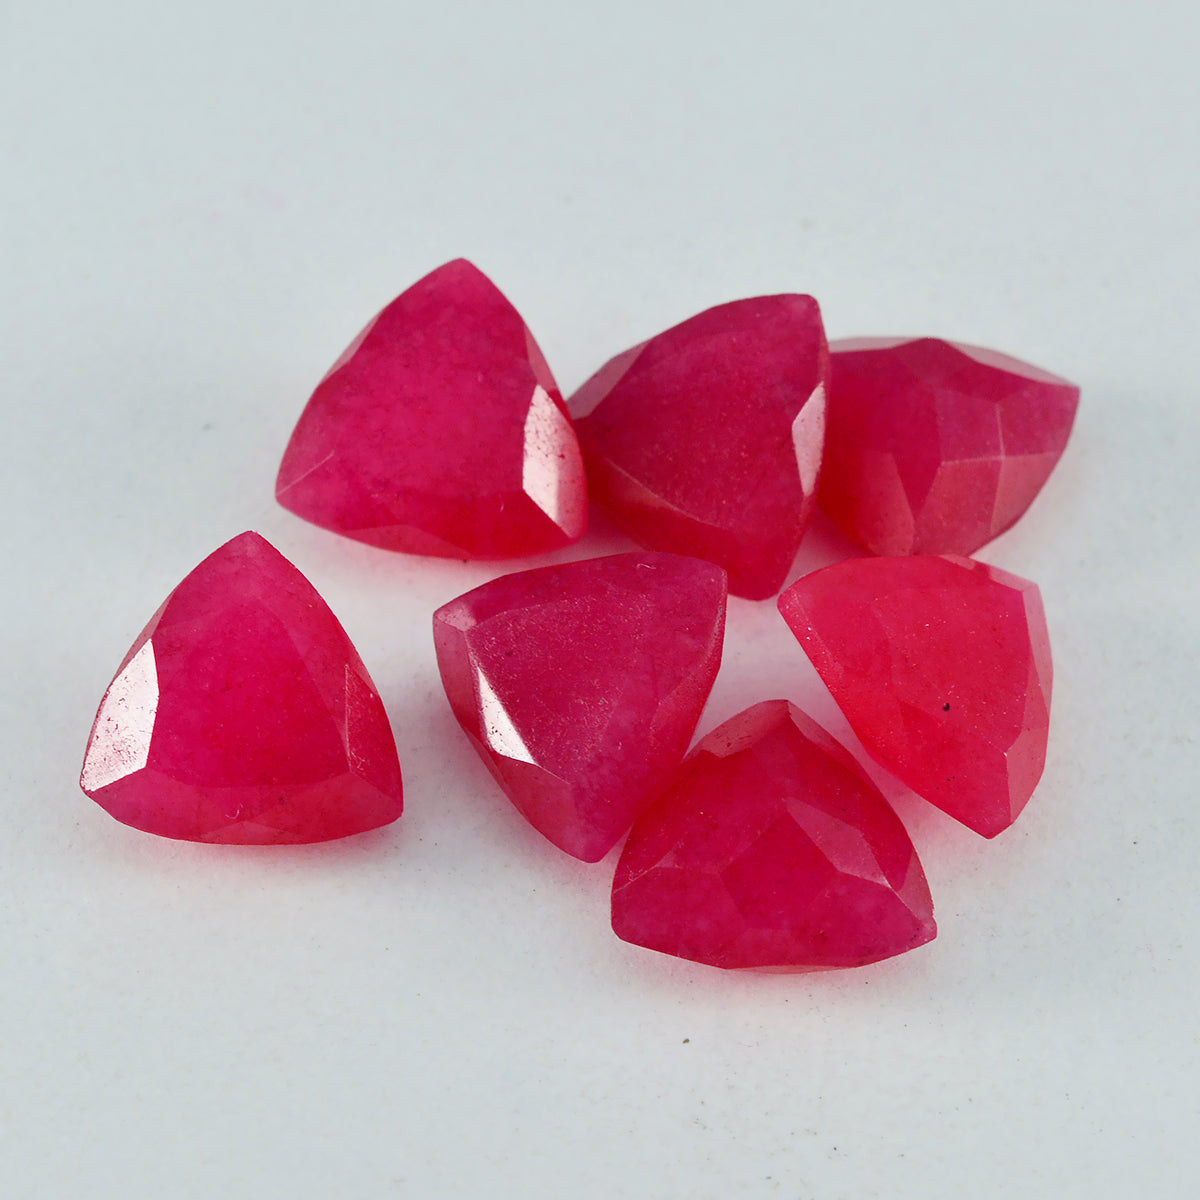 riyogems 1 pz genuino diaspro rosso sfaccettato 11x11 mm trilioni di gemme sfuse di qualità dolce